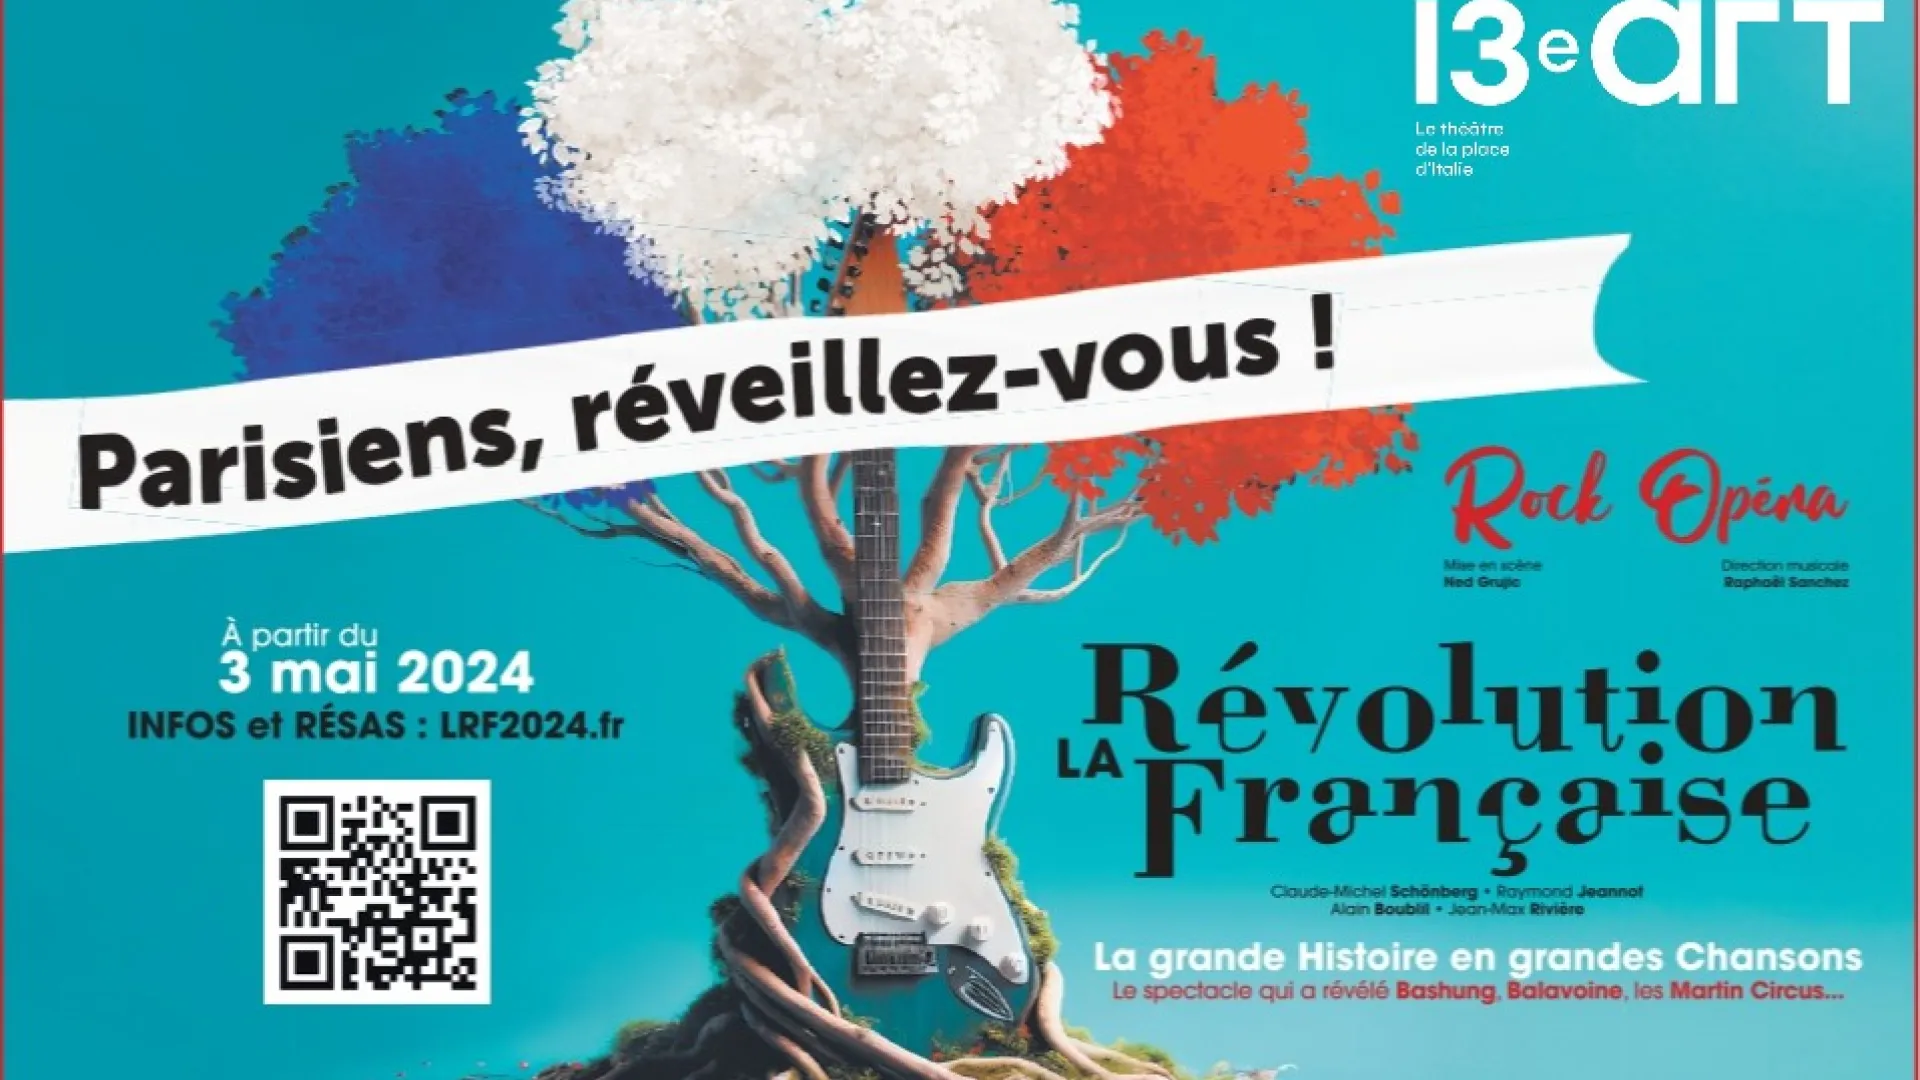 42e Rue La Révolution français